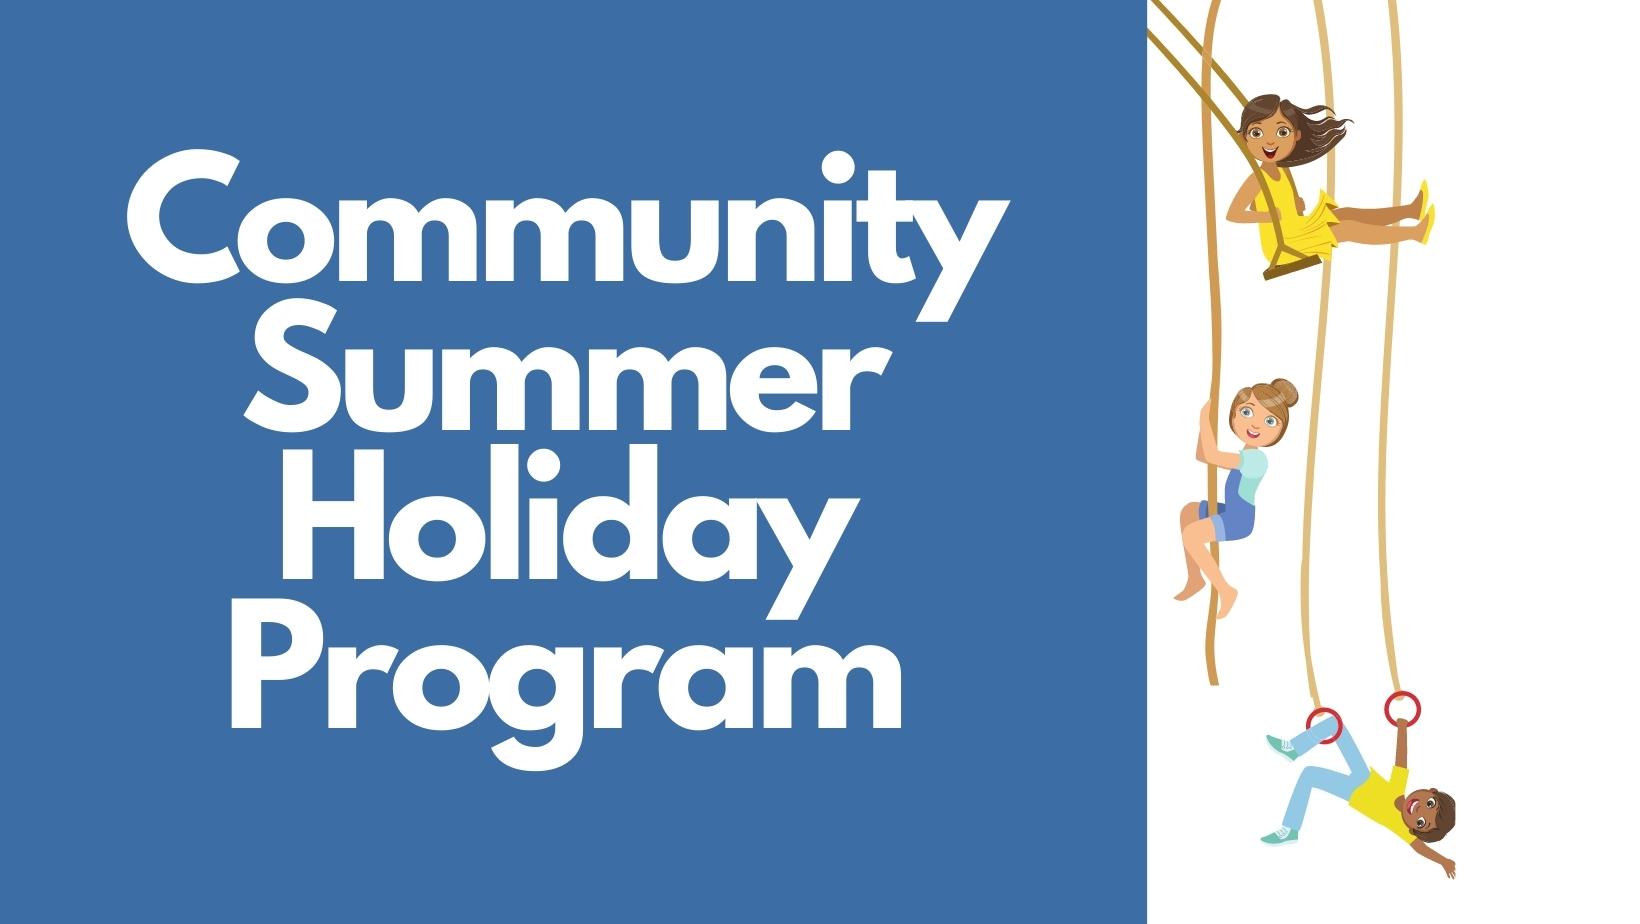 Community Summer Holiday Program Released